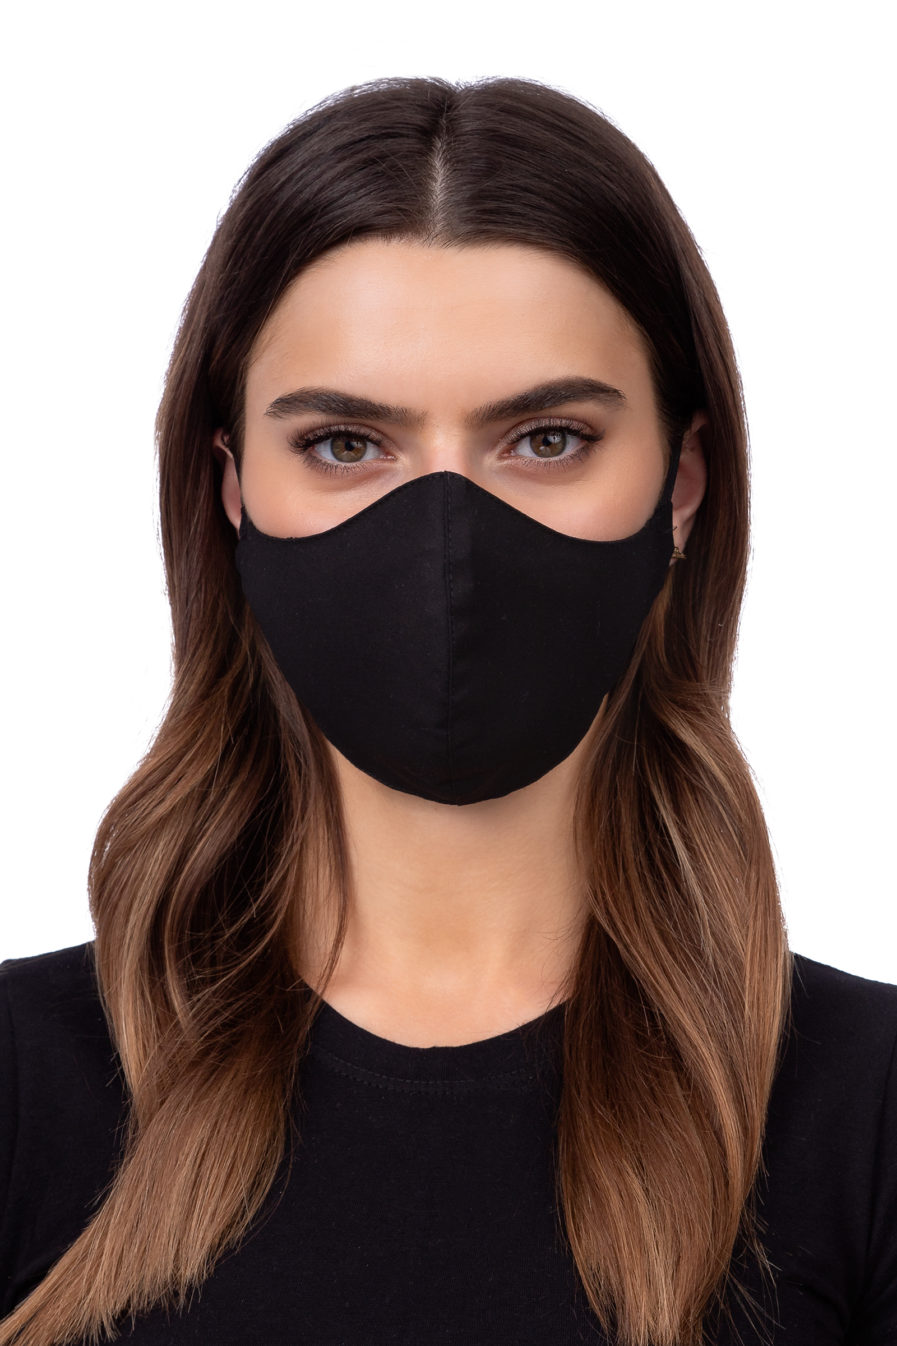 Maska ochronna na twarz - profilowana czarna